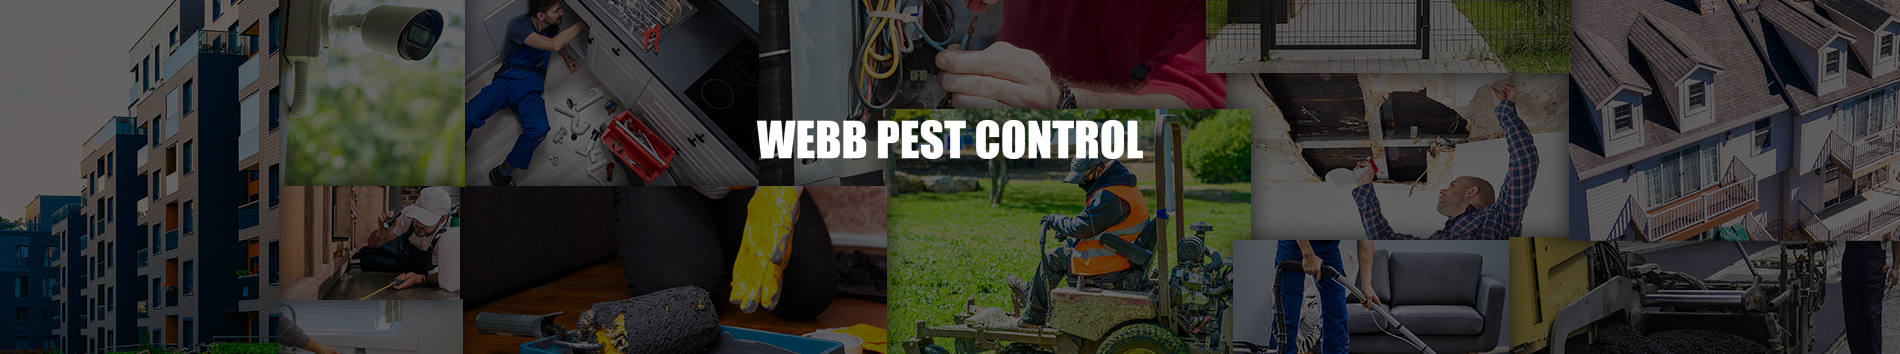 Webbs Pest Control